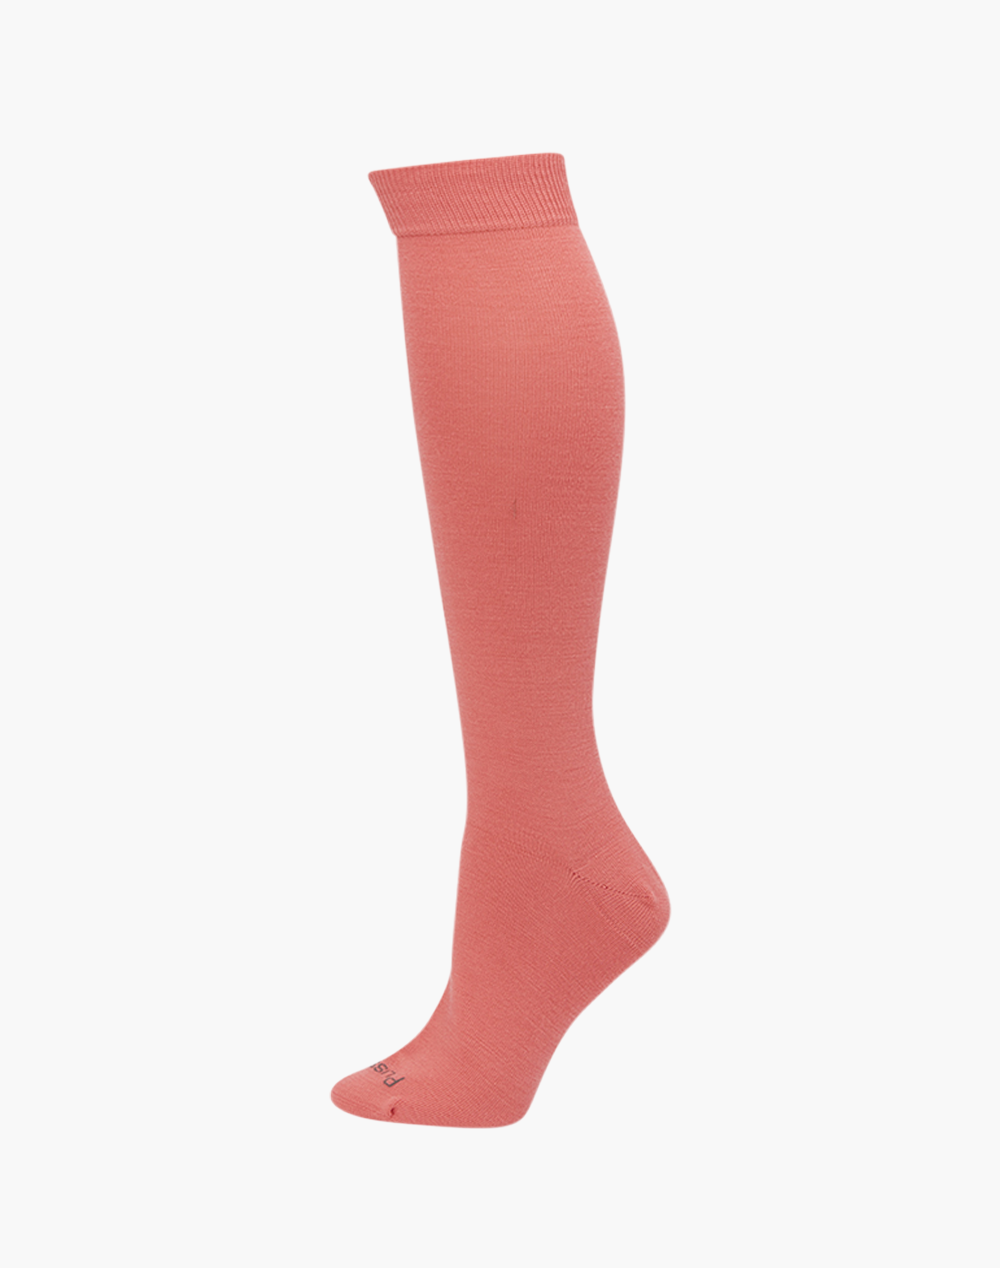 $5 Womens Socks